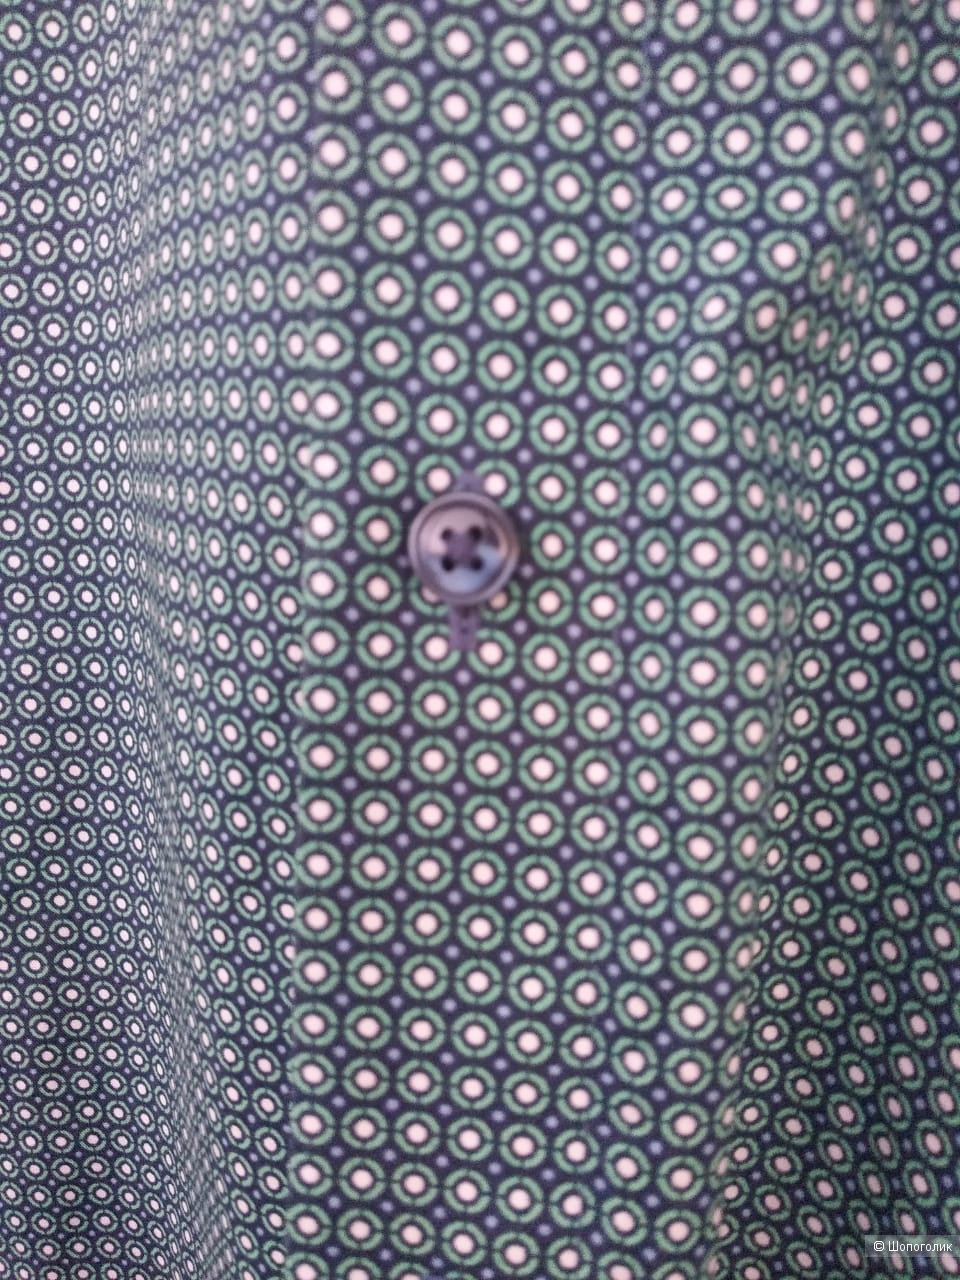 Рубашка Olymp Luxor modern fit, размер 15,5" 39